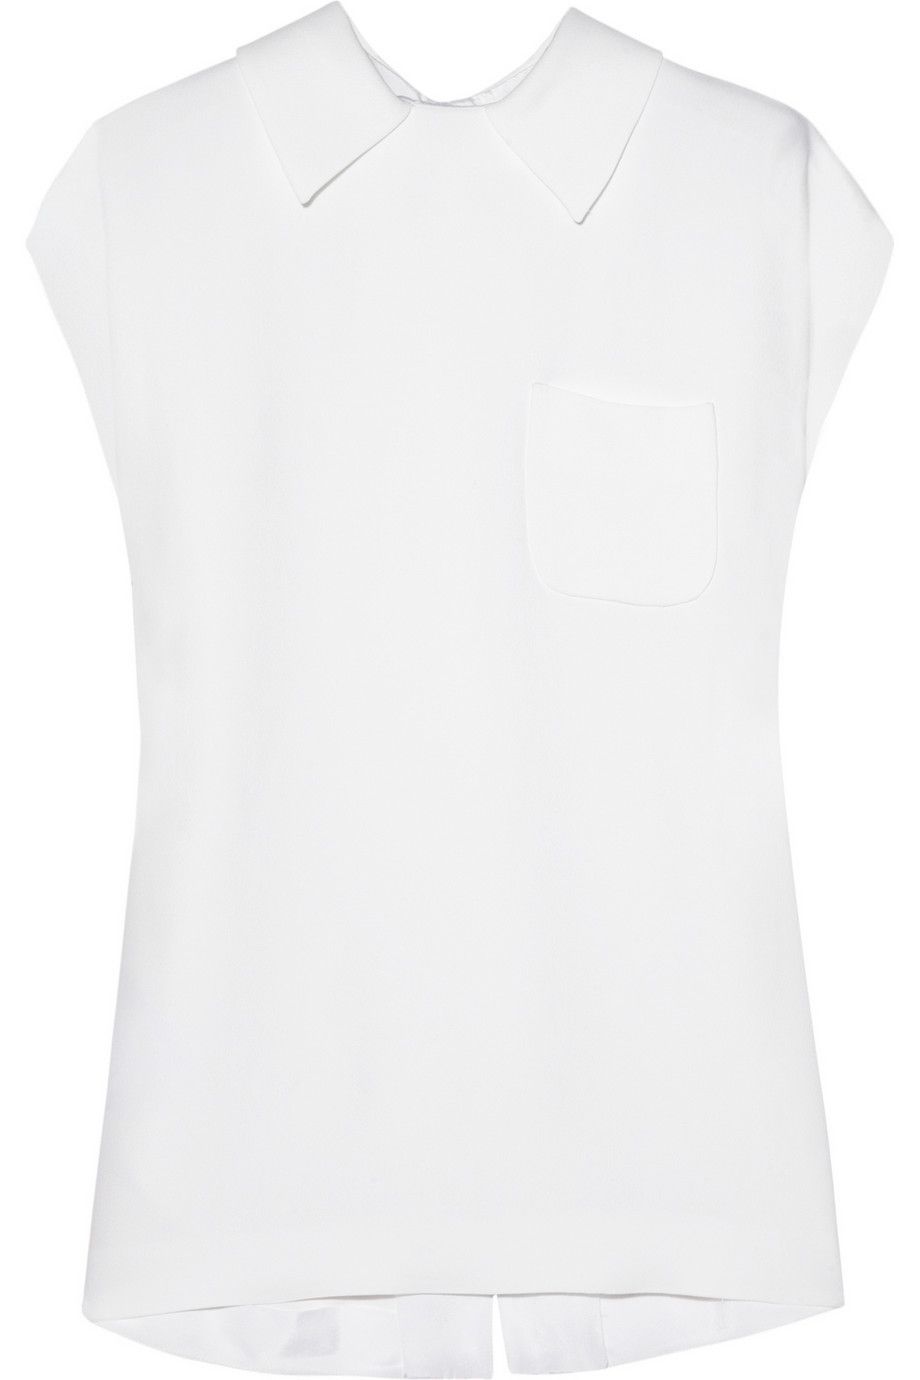 Product, Sleeve, Collar, White, Baby & toddler clothing, Pattern, Neck, Sleeveless shirt, Design, Active shirt, 